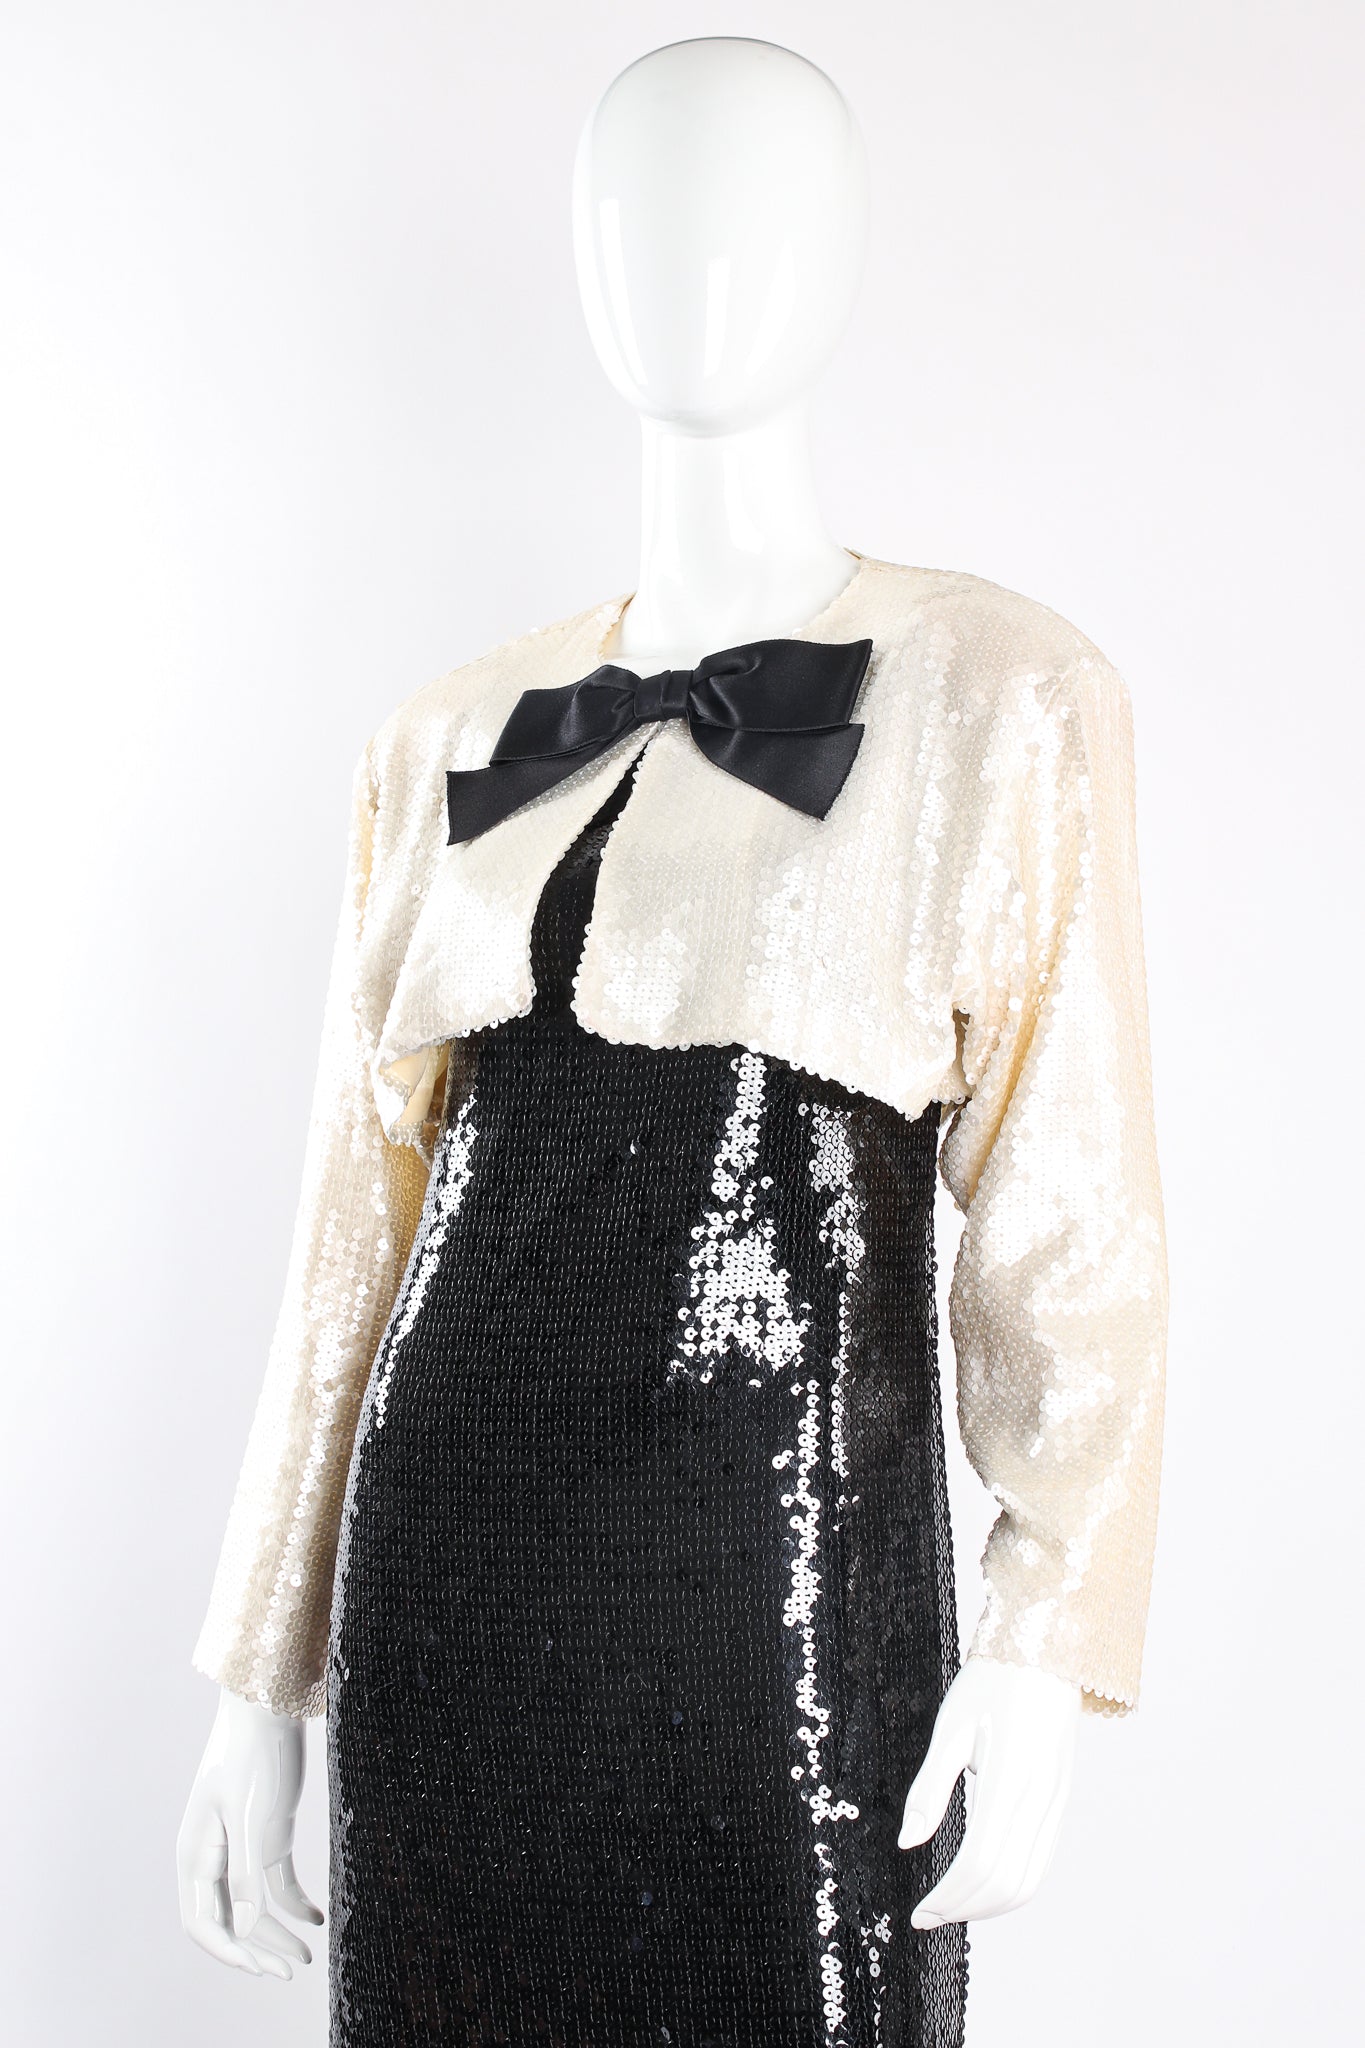 Strapless Black Dress - 538 For Sale on 1stDibs